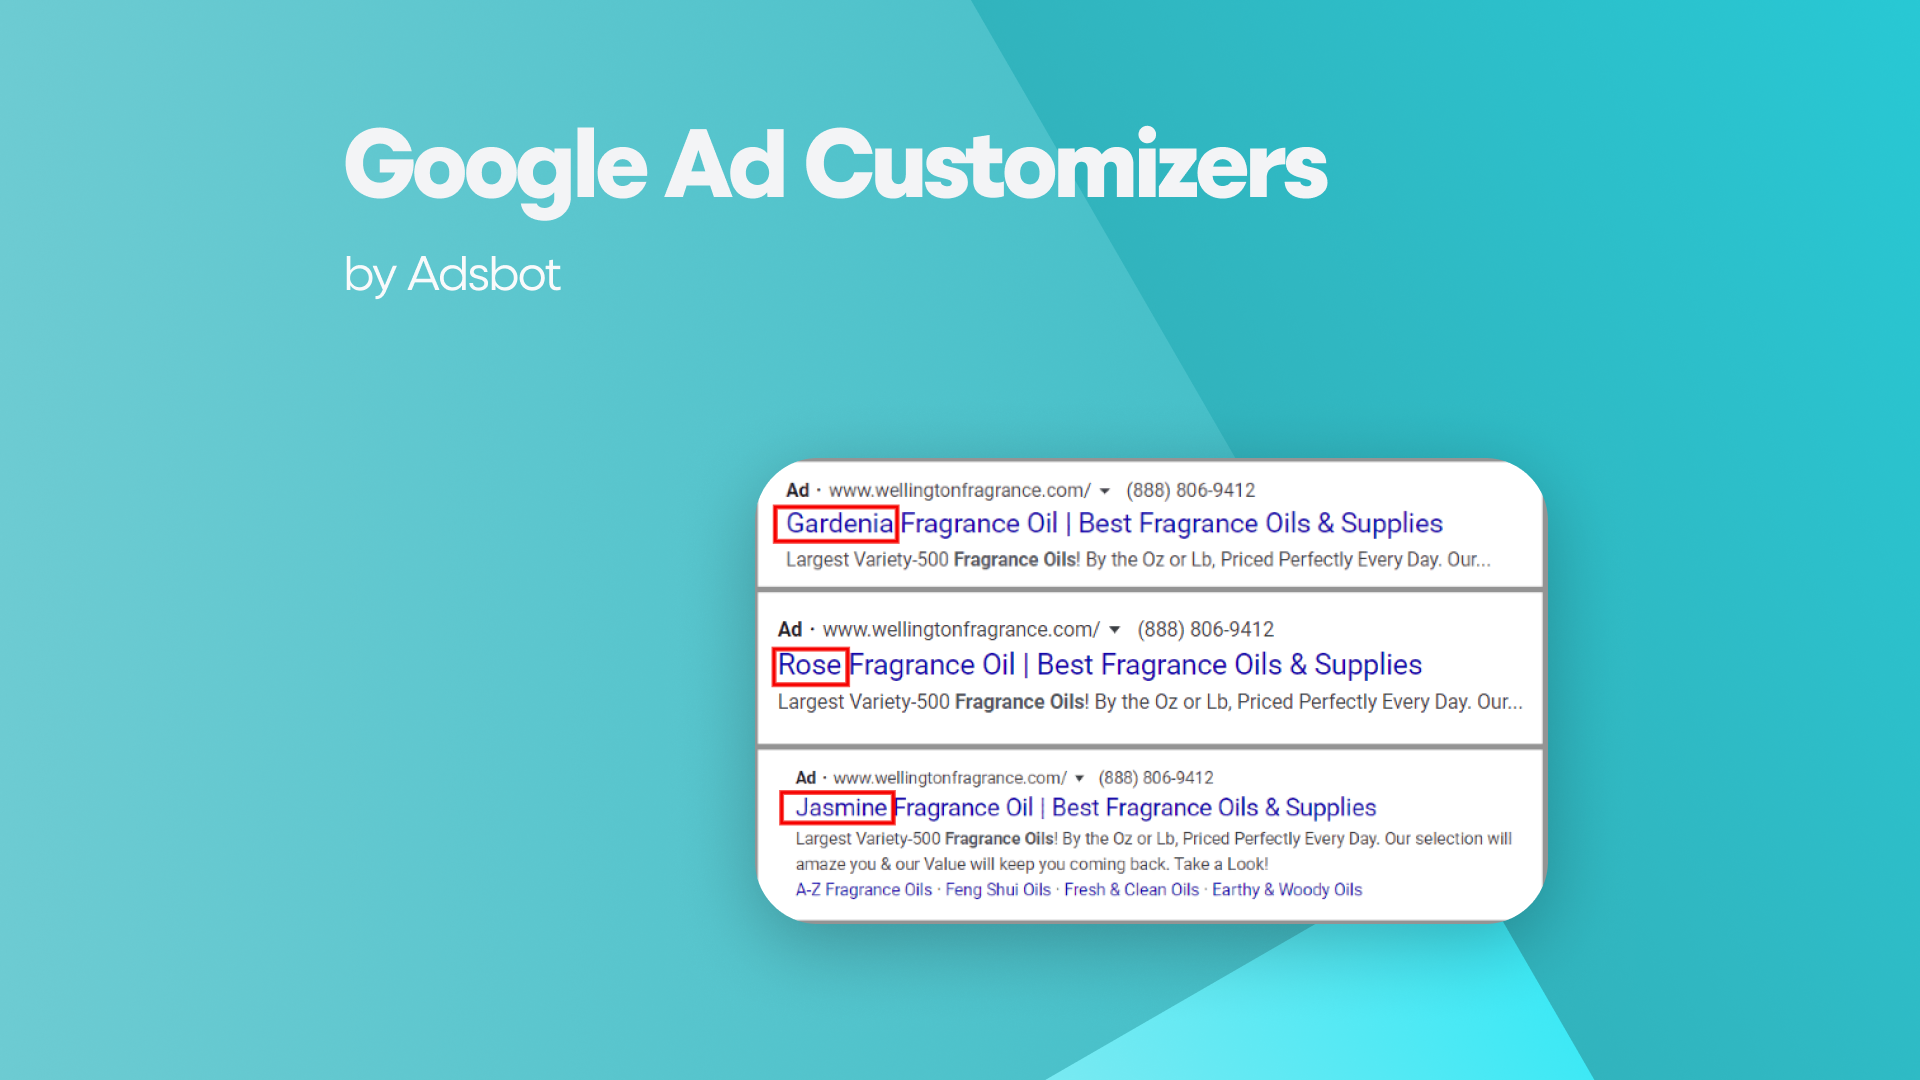 Google Ad Customizers